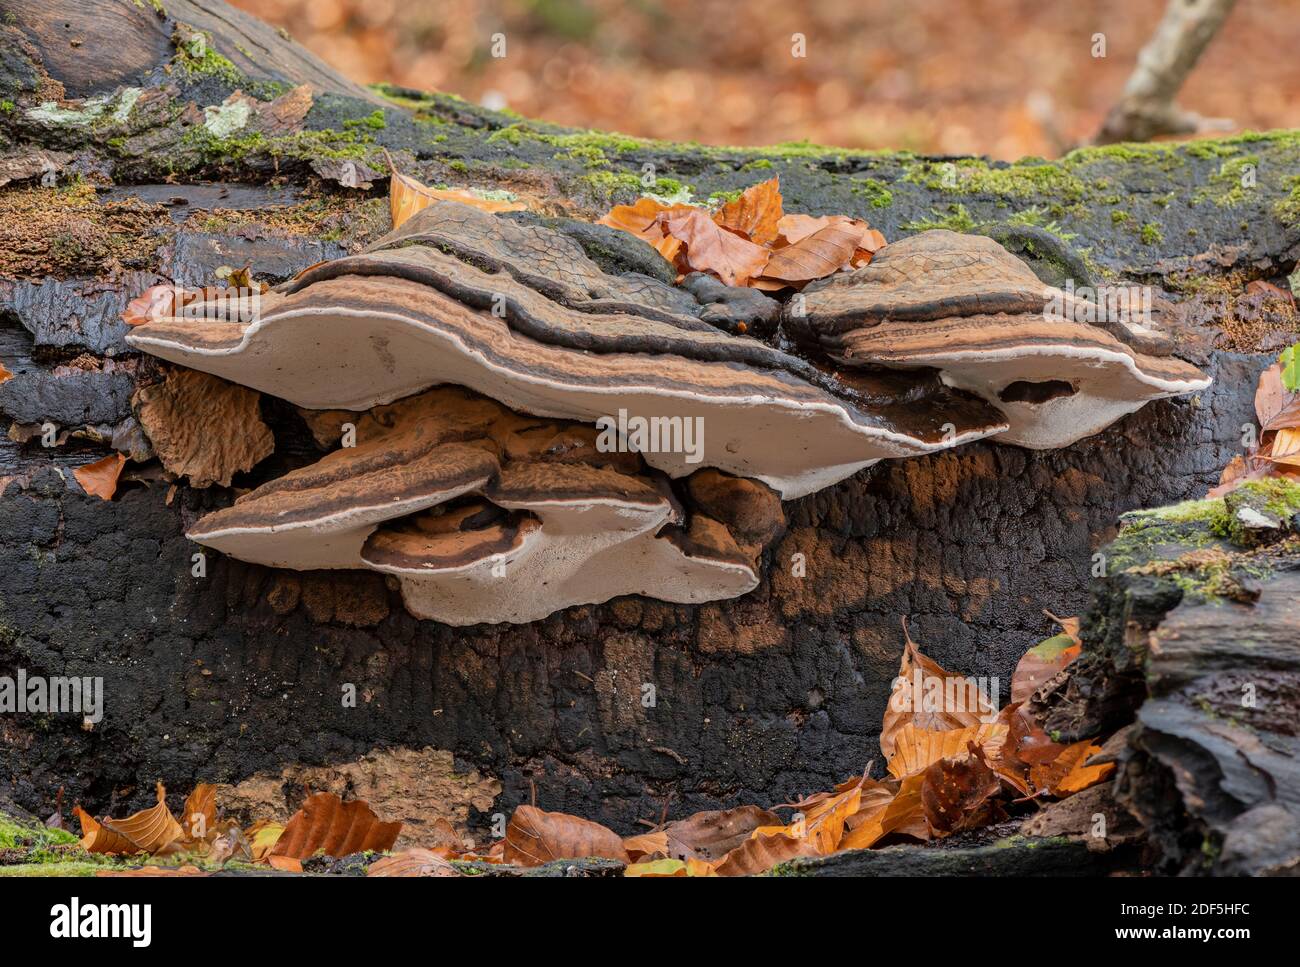 Southern Bracket, Ganoderma australe, fungus on fallen beech tree in autumn, New Forest. Stock Photo